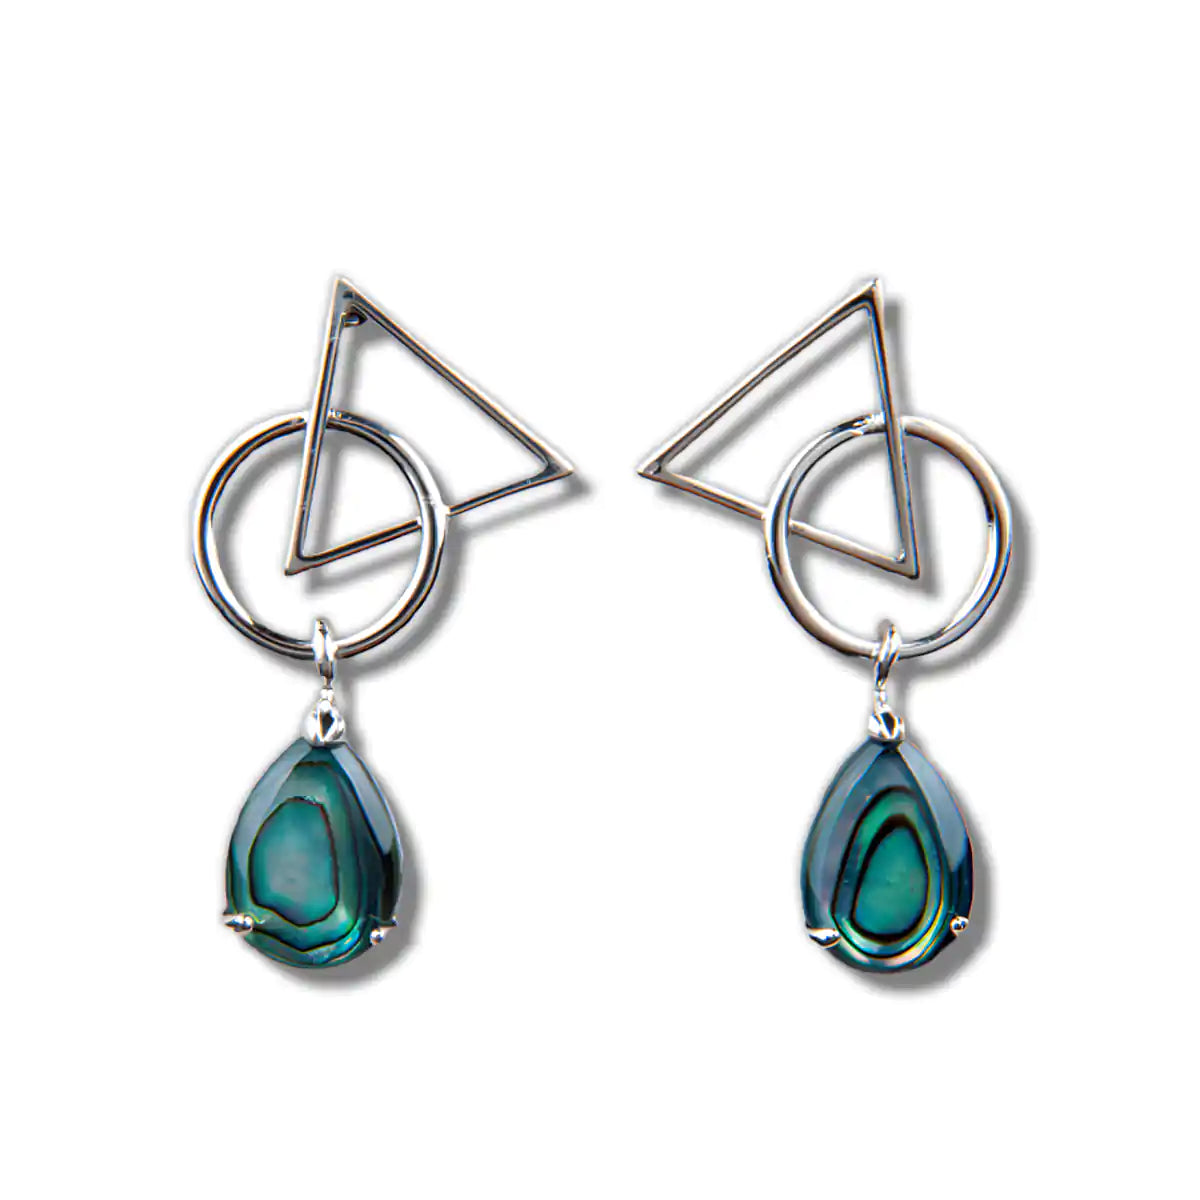 Glacier pearle elementary earrings